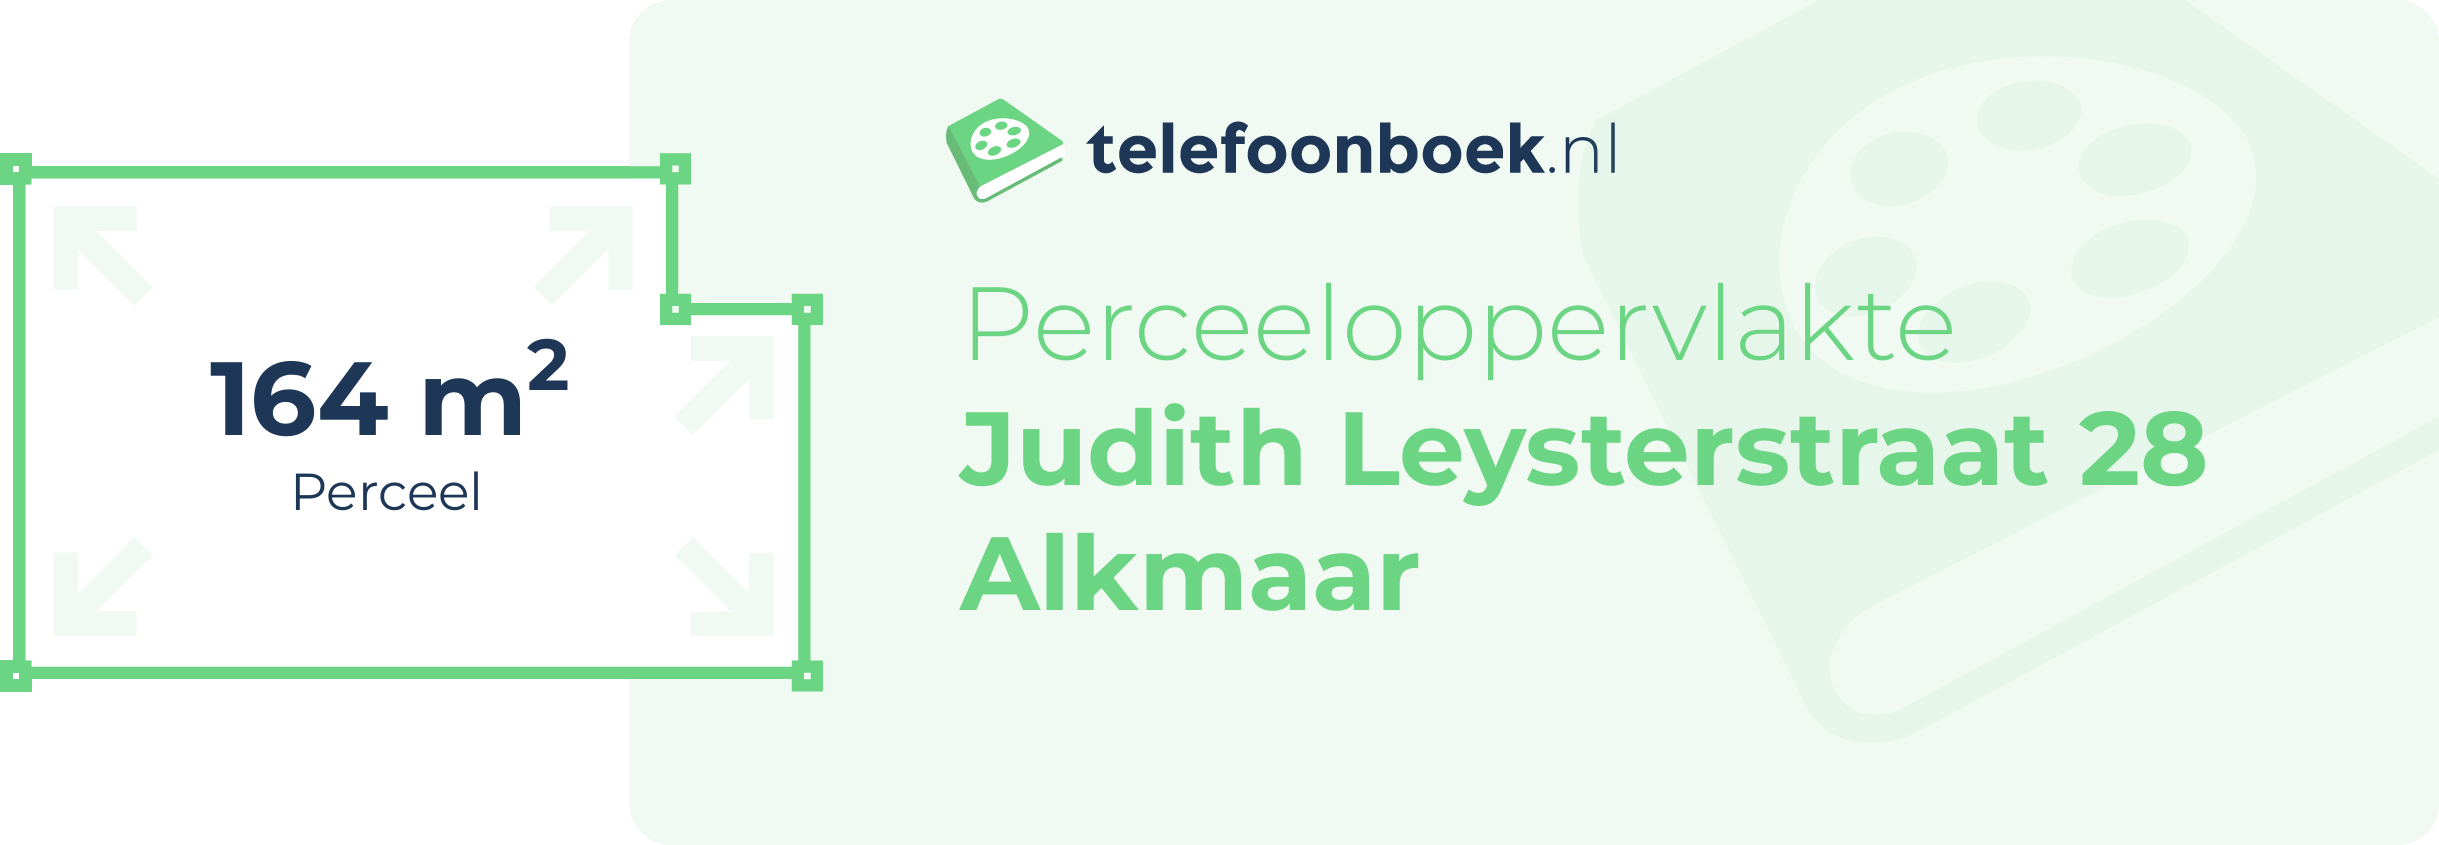 Perceeloppervlakte Judith Leysterstraat 28 Alkmaar